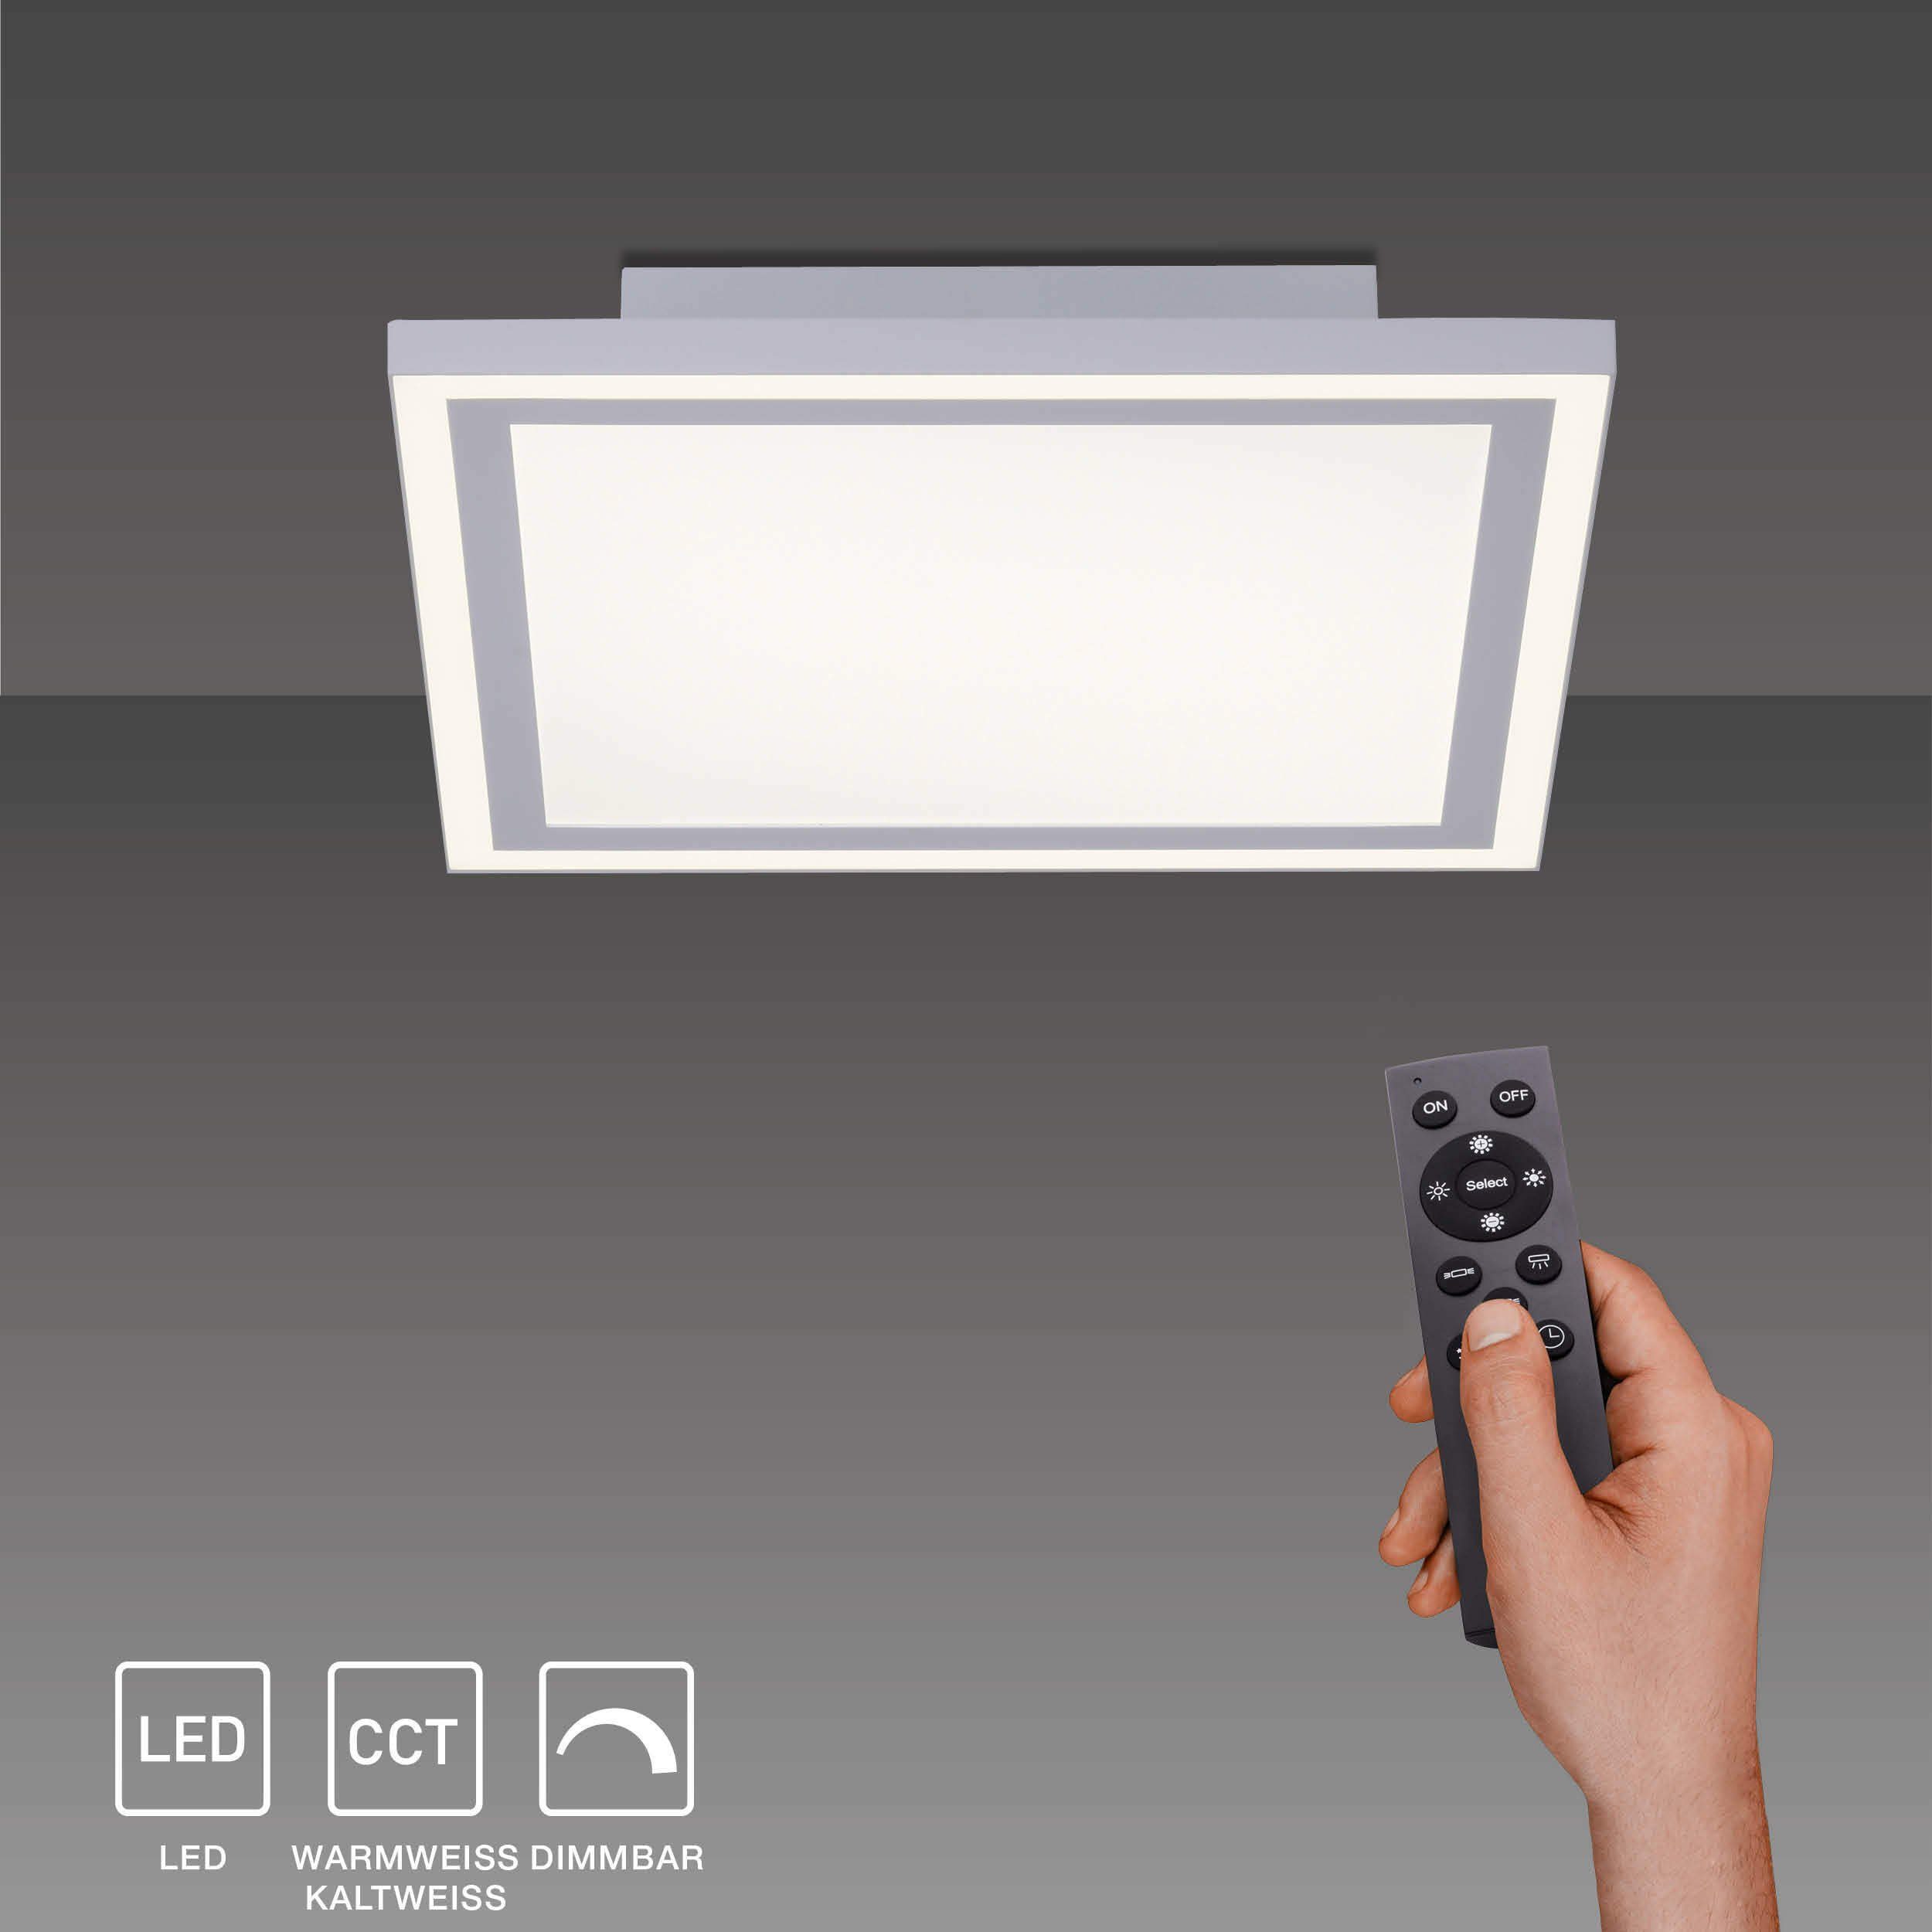 Warmweiß 1xLED-Board/17W, LED per Kaltweiß, CCT-Farbtemperaturregelung, Deckenleuchte Farbwechsel, LED Memoryfunktion, Panel Fernbedienung Dimmfunktion, bis EDGE, dimmbar SellTec